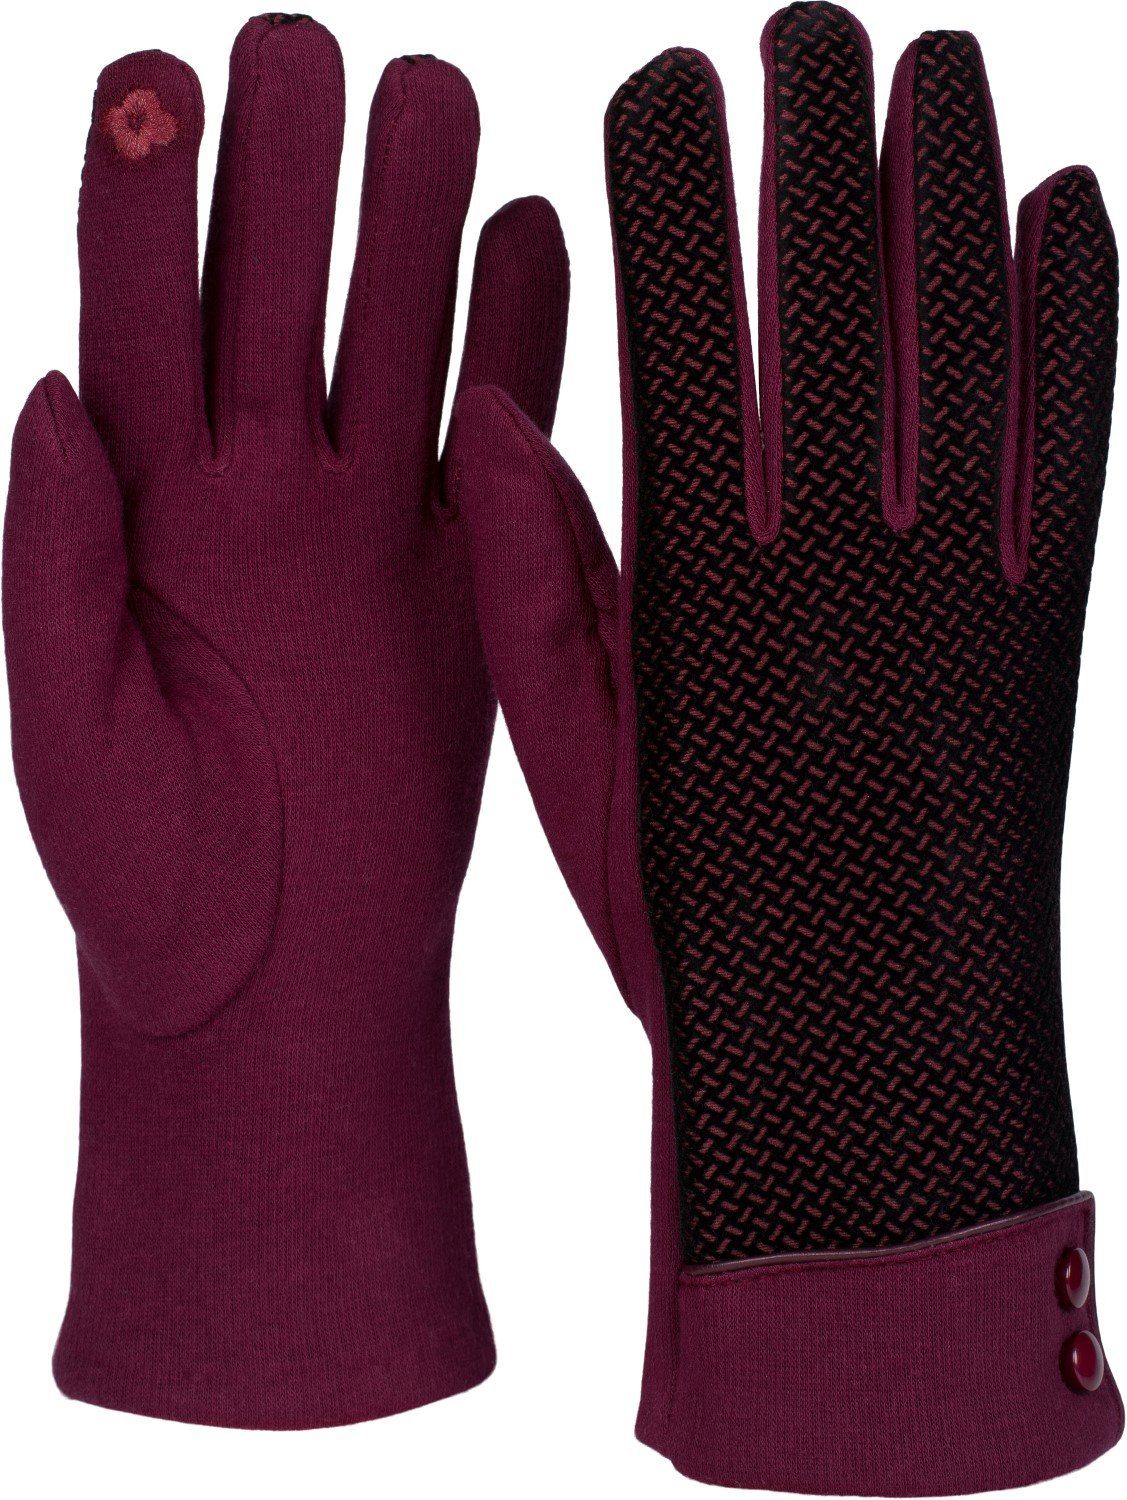 styleBREAKER Baumwollhandschuhe Touchscreen Handschuhe mit weichem Riffel Muster Bordeaux-Rot